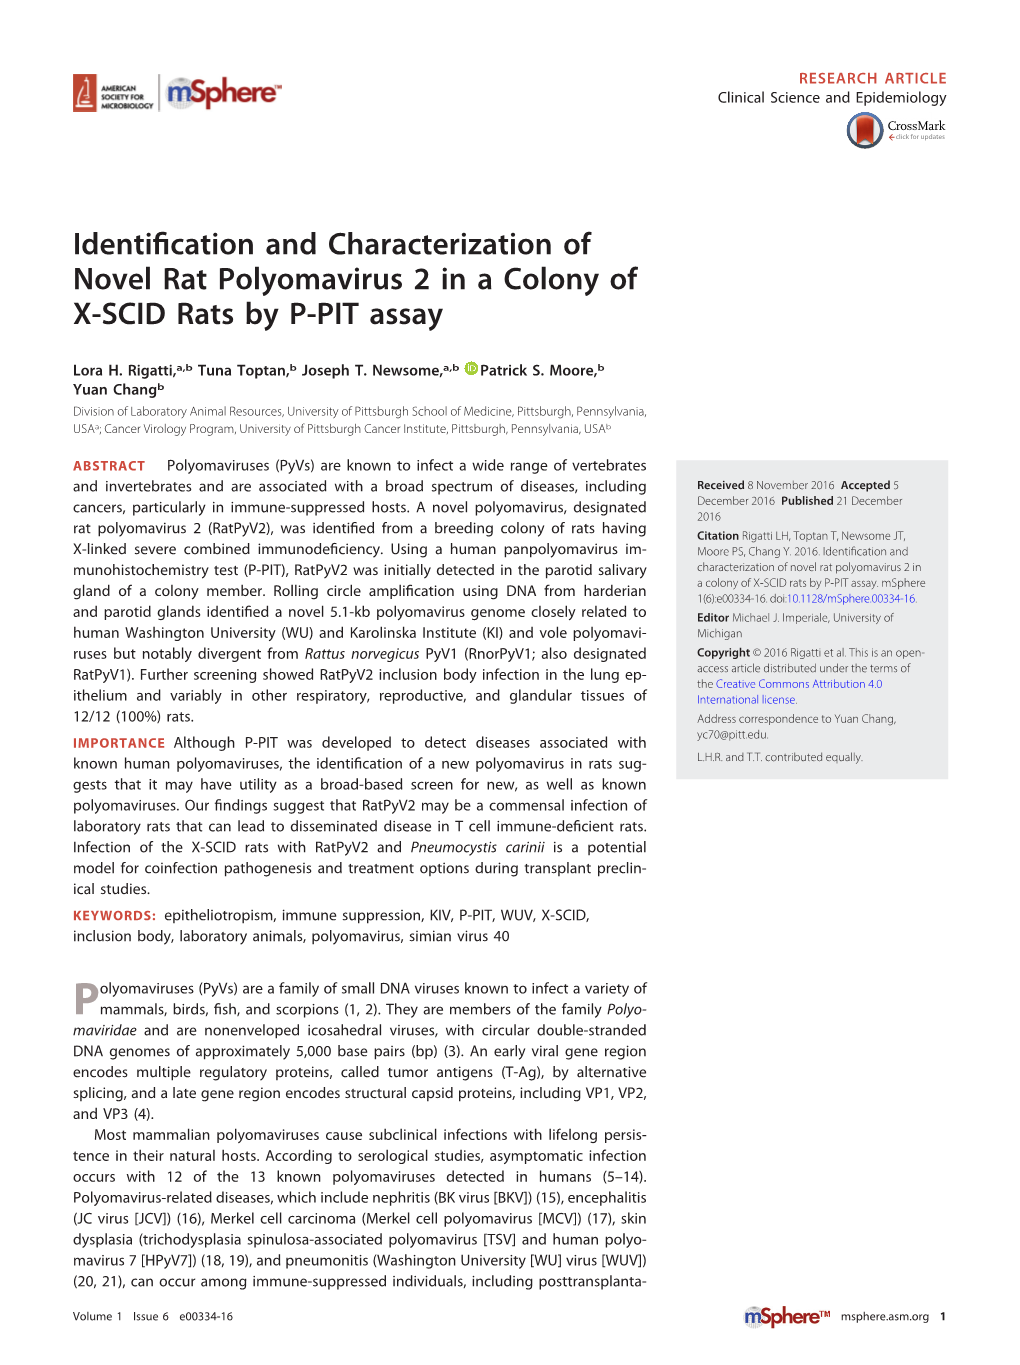 Identification and Characterization of Novel Rat Polyomavirus 2 in A